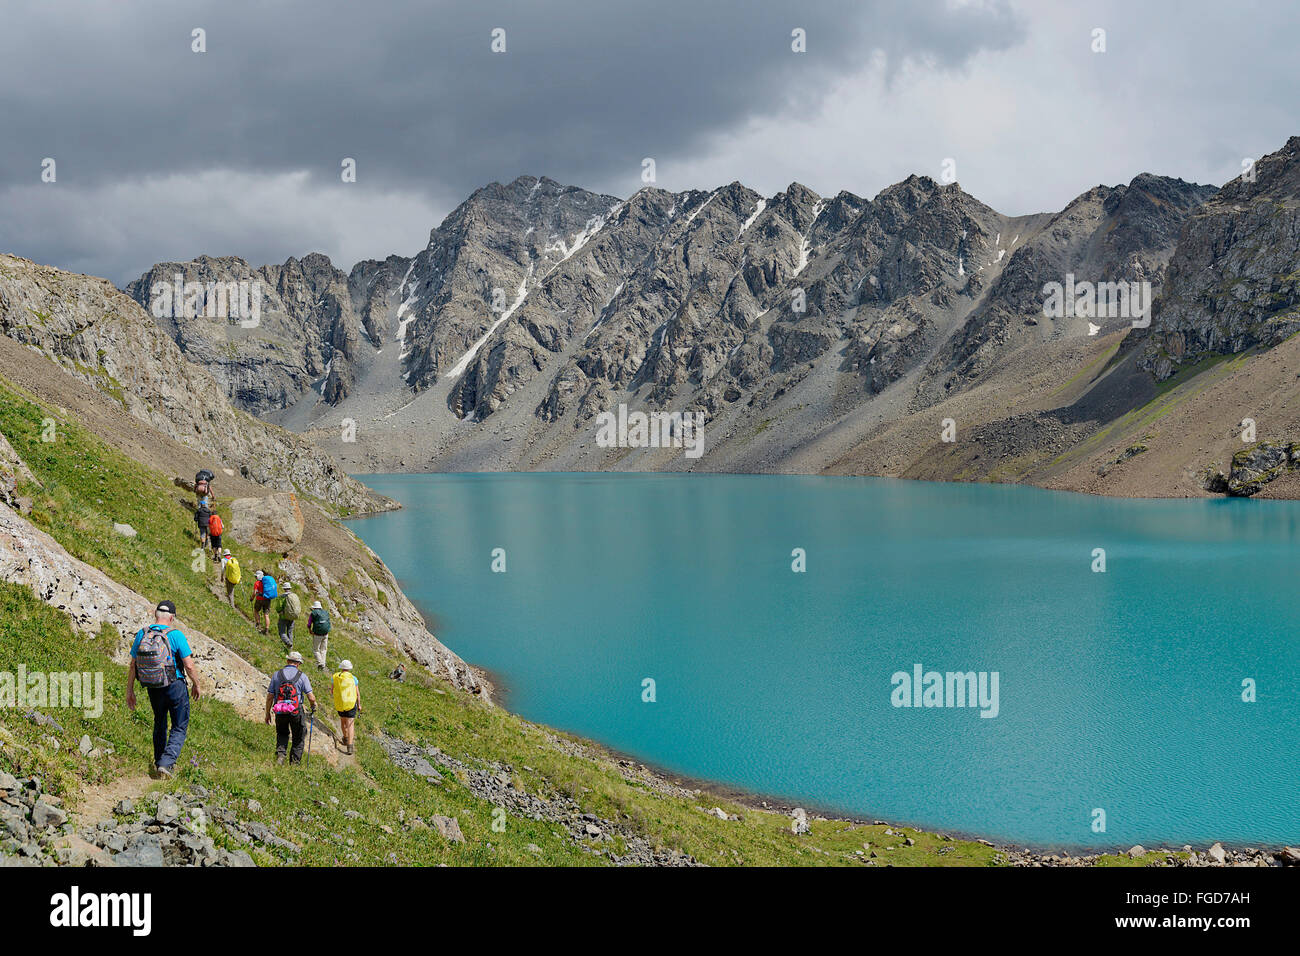 Trekking group at Ala-Kol Lake, Kyrgyzstan. Stock Photo